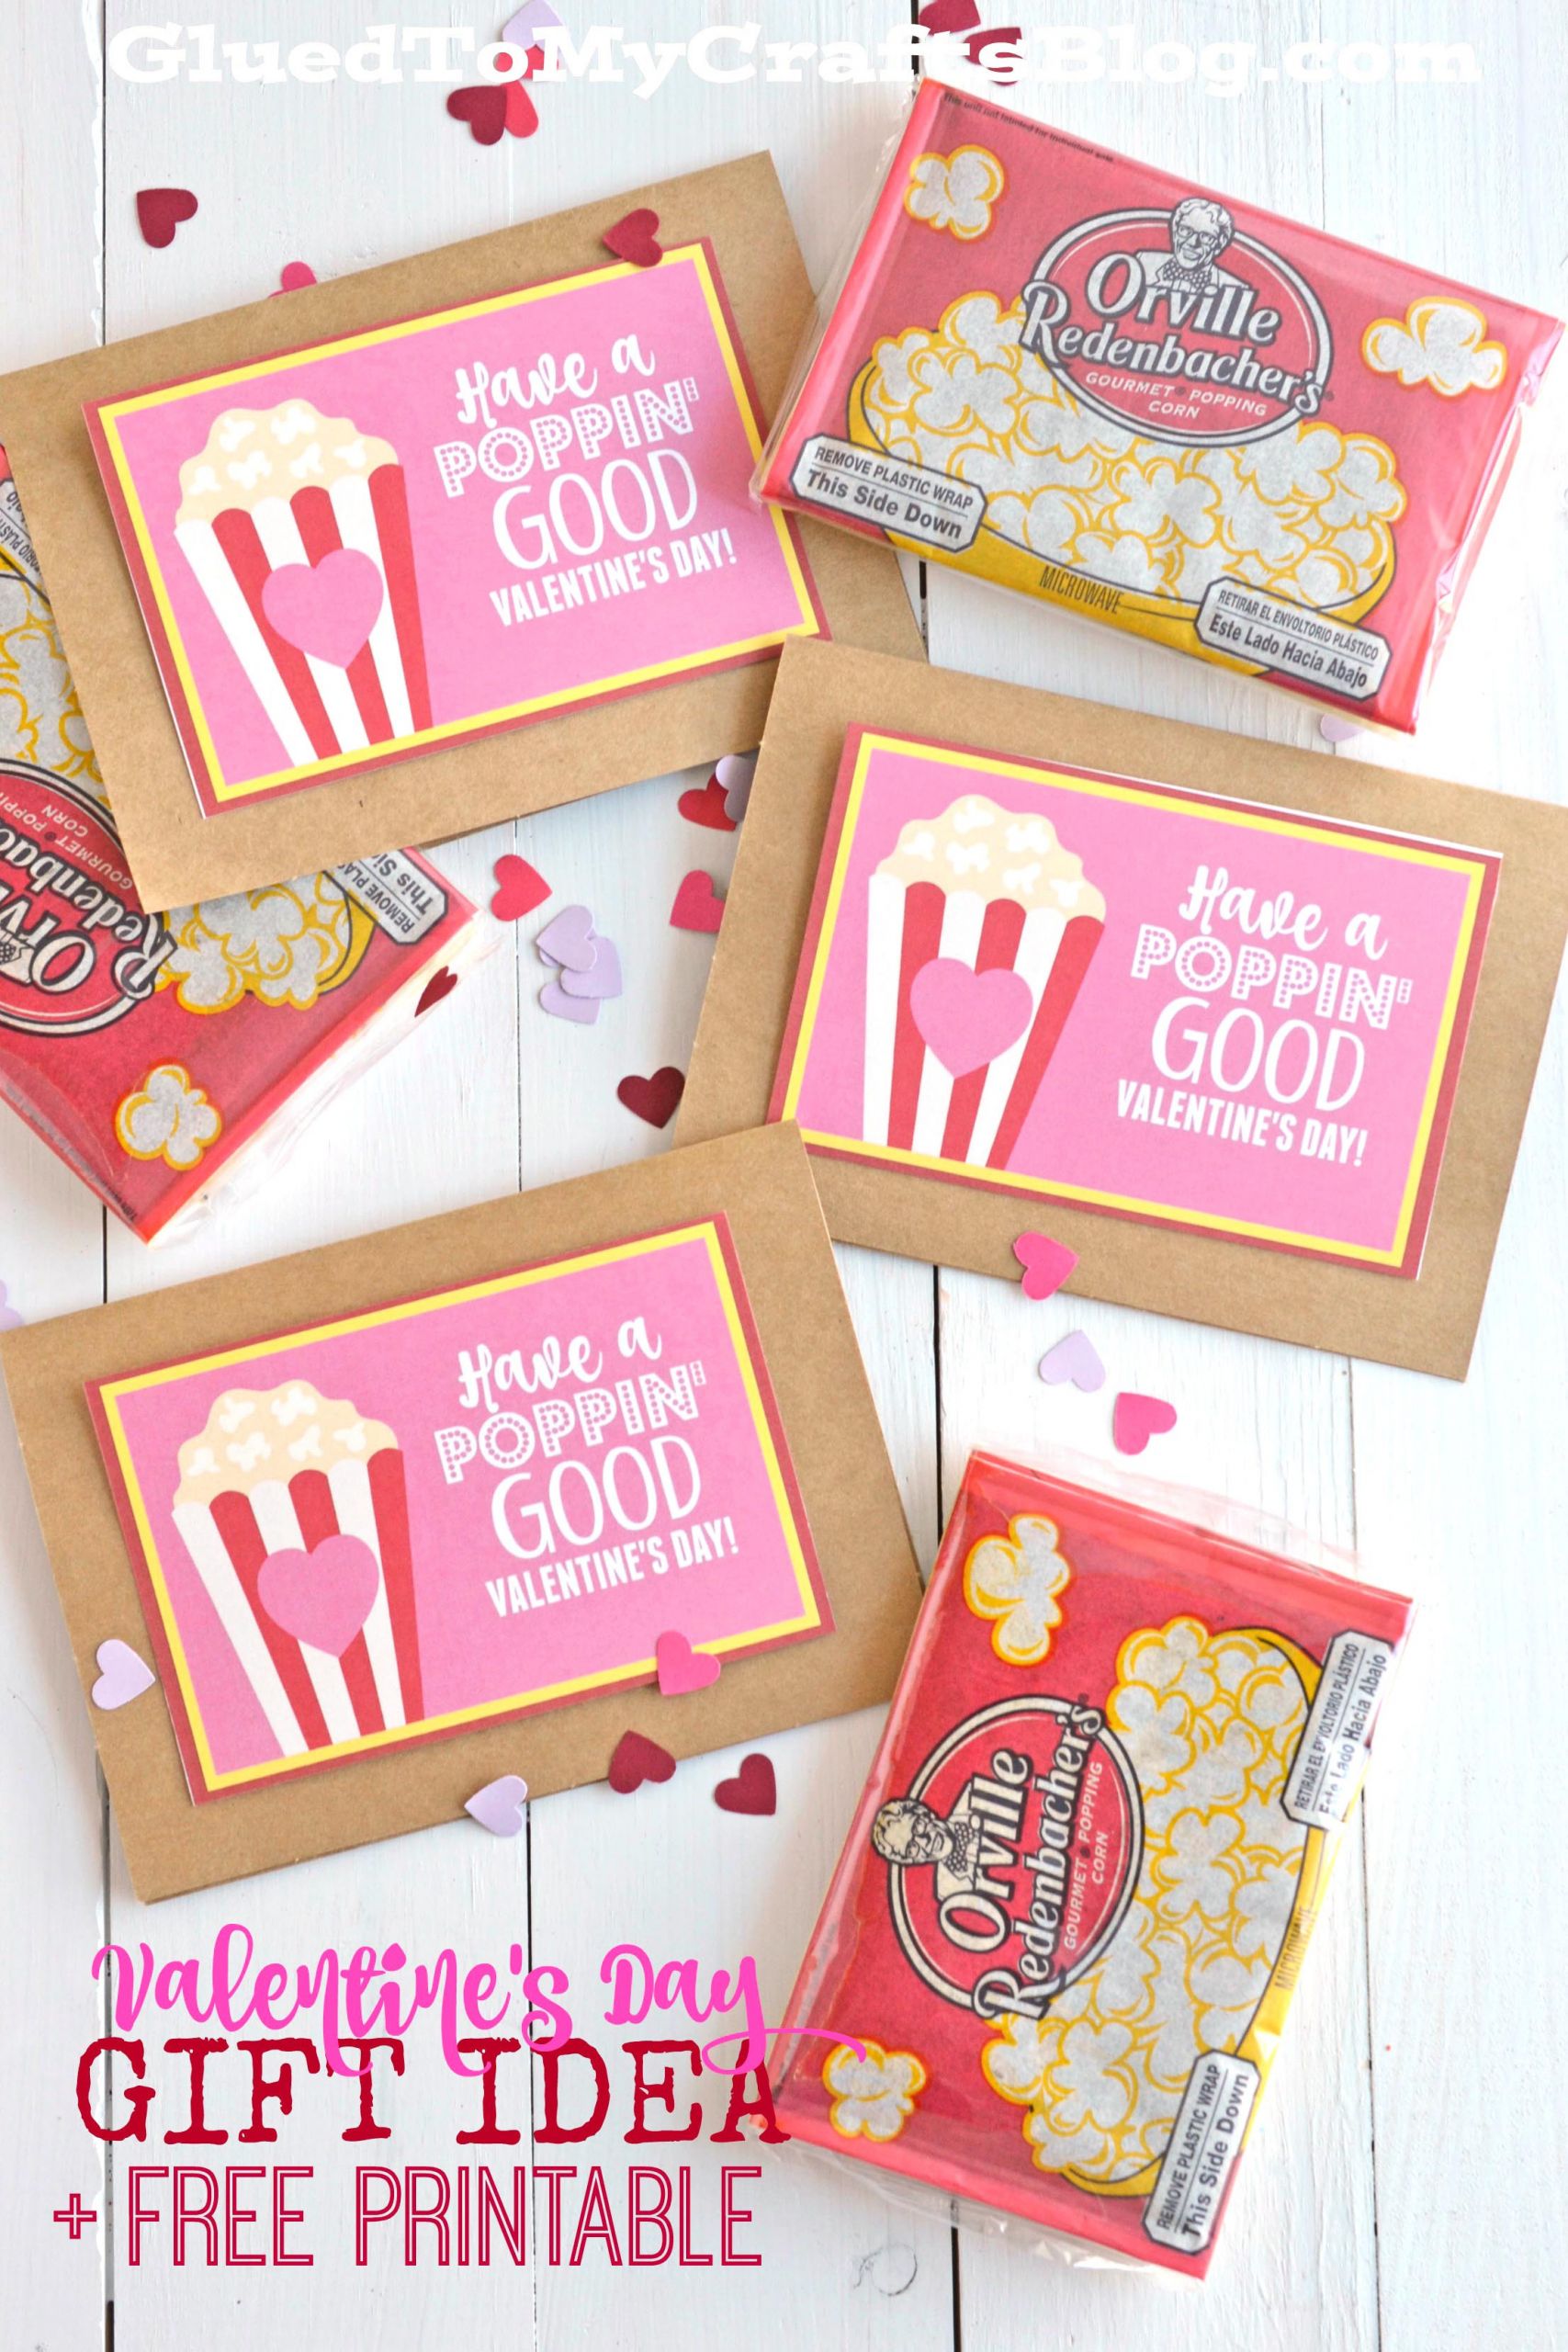 Valentine'S Day Craft Gift Ideas
 Poppin Good Valentine s Day Gift Idea w free printable